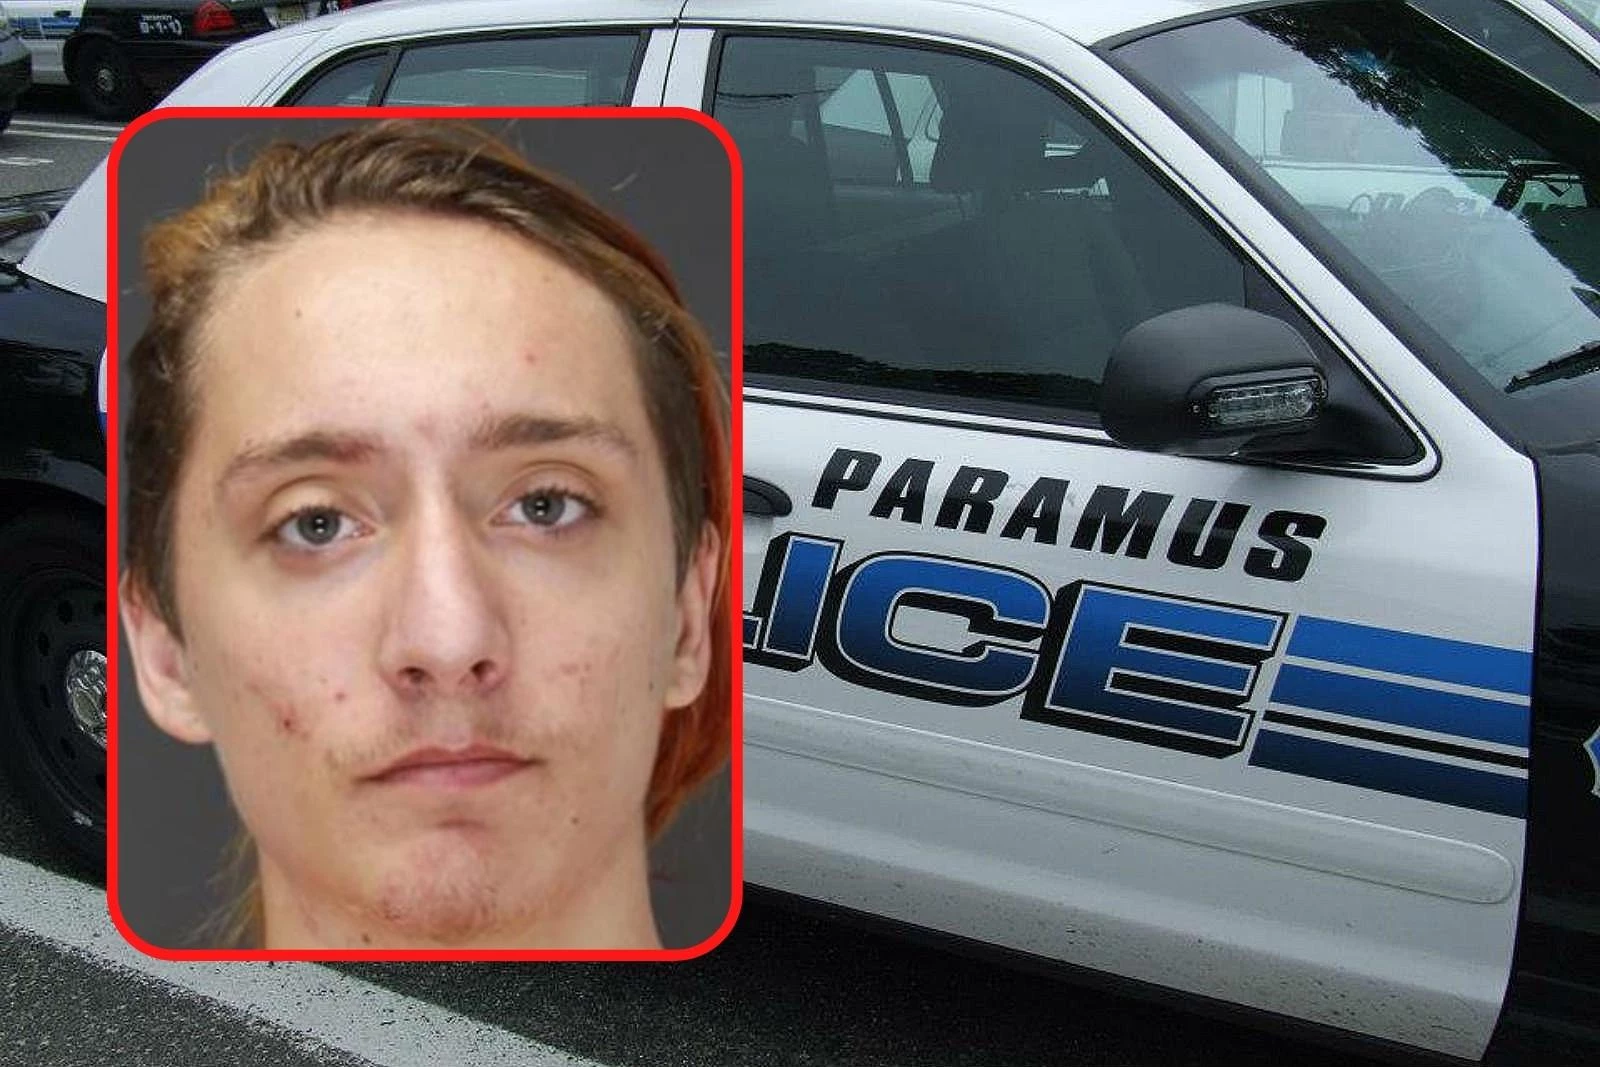 Cops: Teen who raped minor in Paramus, NJ also made child porn